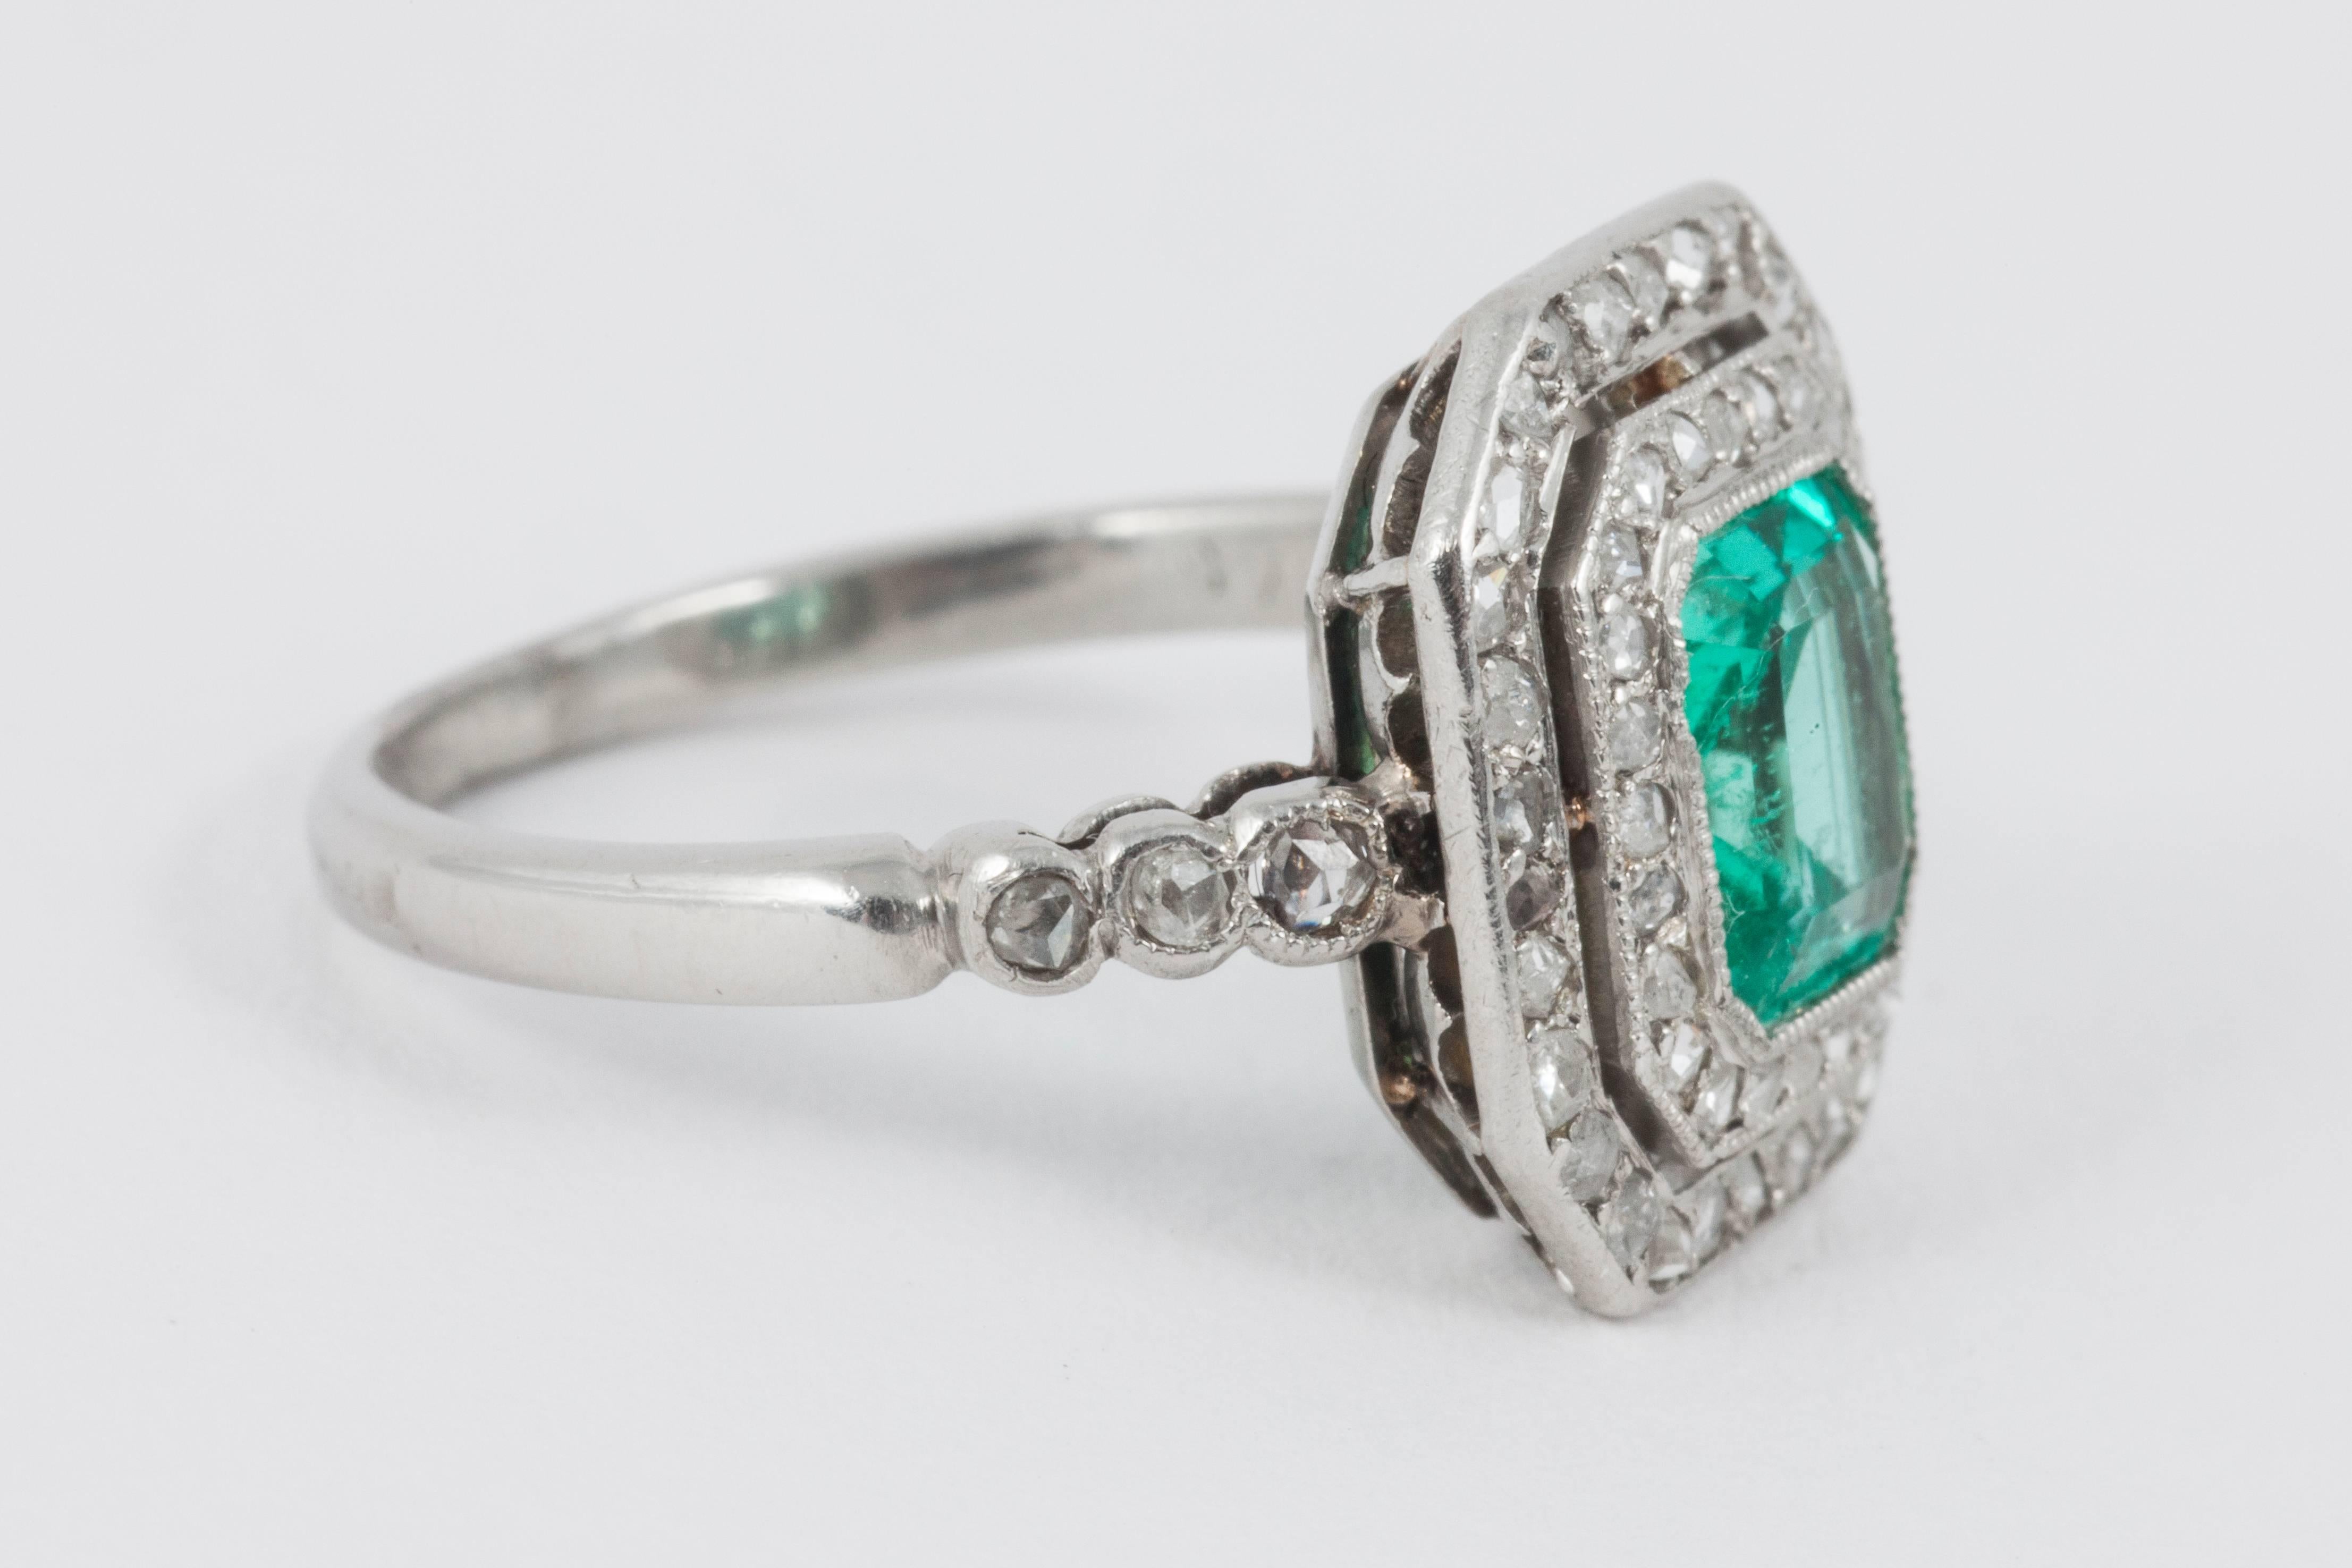 18ct gold & platinum set art deco emerald & diamond ring, circa 1930’s